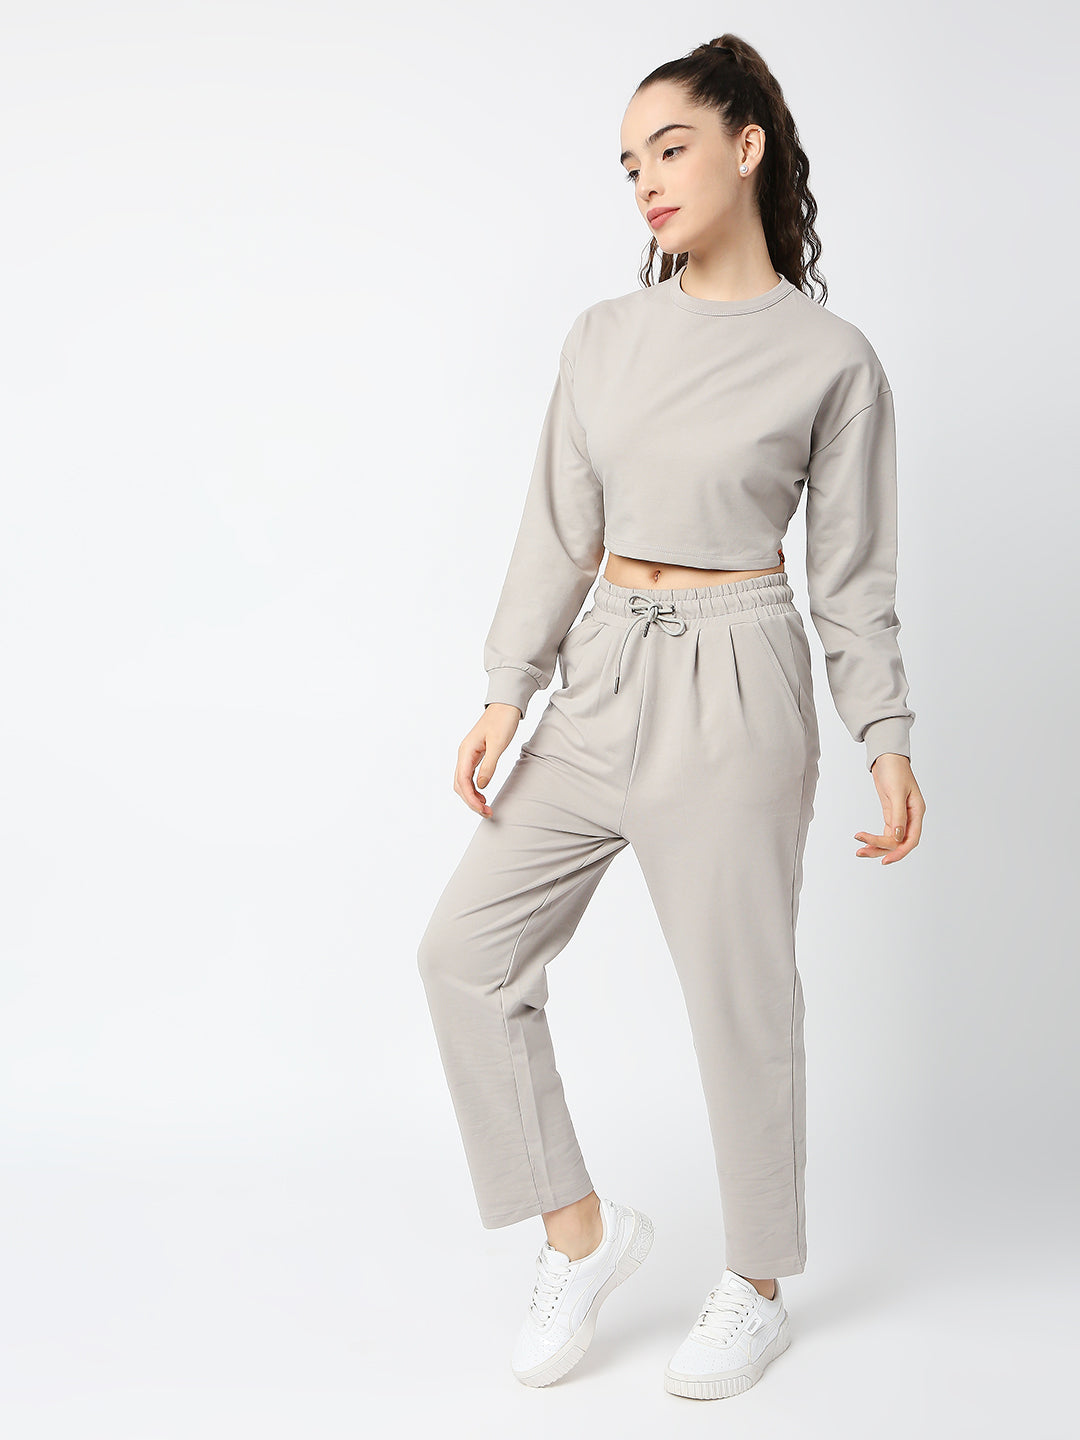 Buy Blamblack Women's Grey Color Full Sleeves Co-ordinates Set